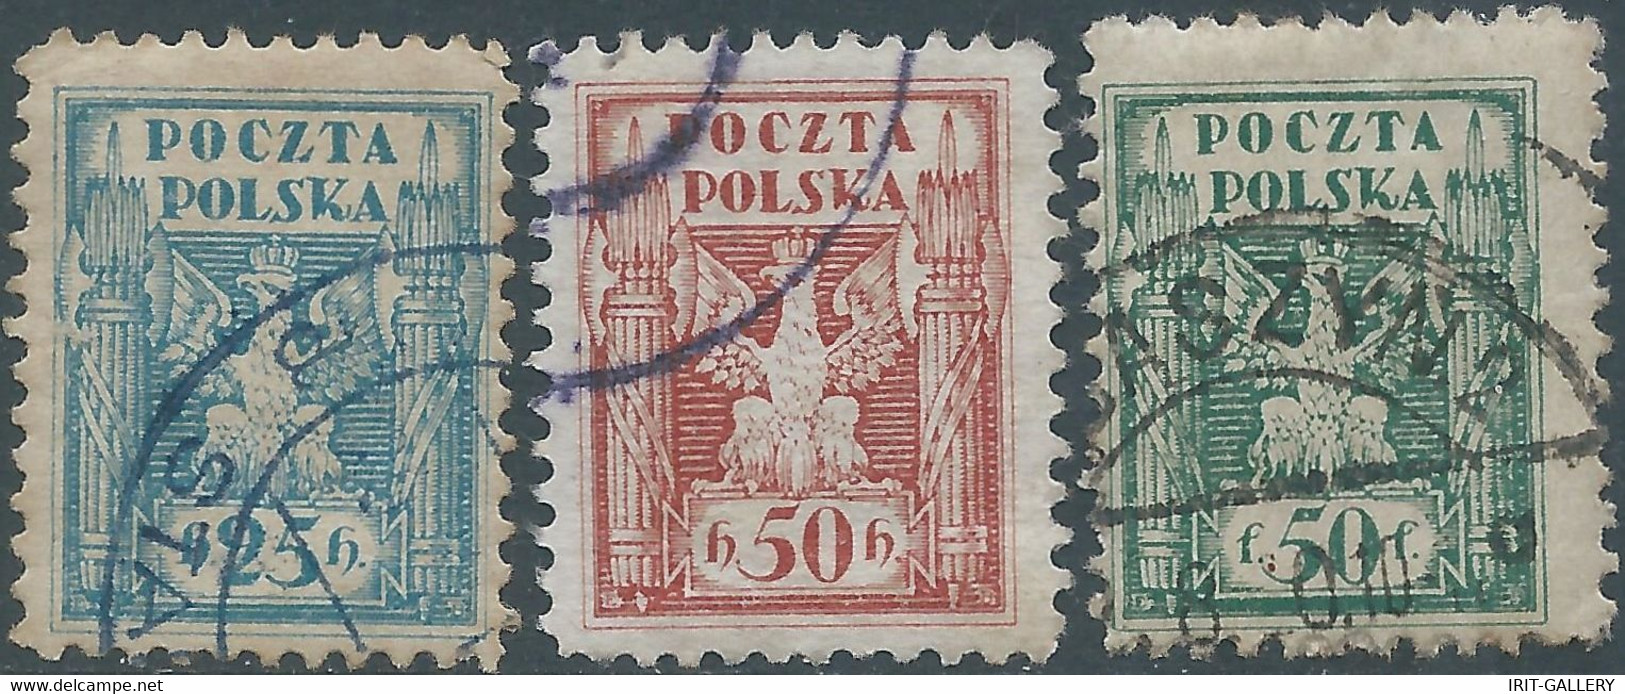 POLONIA-POLAND-POLSKA,1919 South Poland Issues,Obliterated - Oblitérés